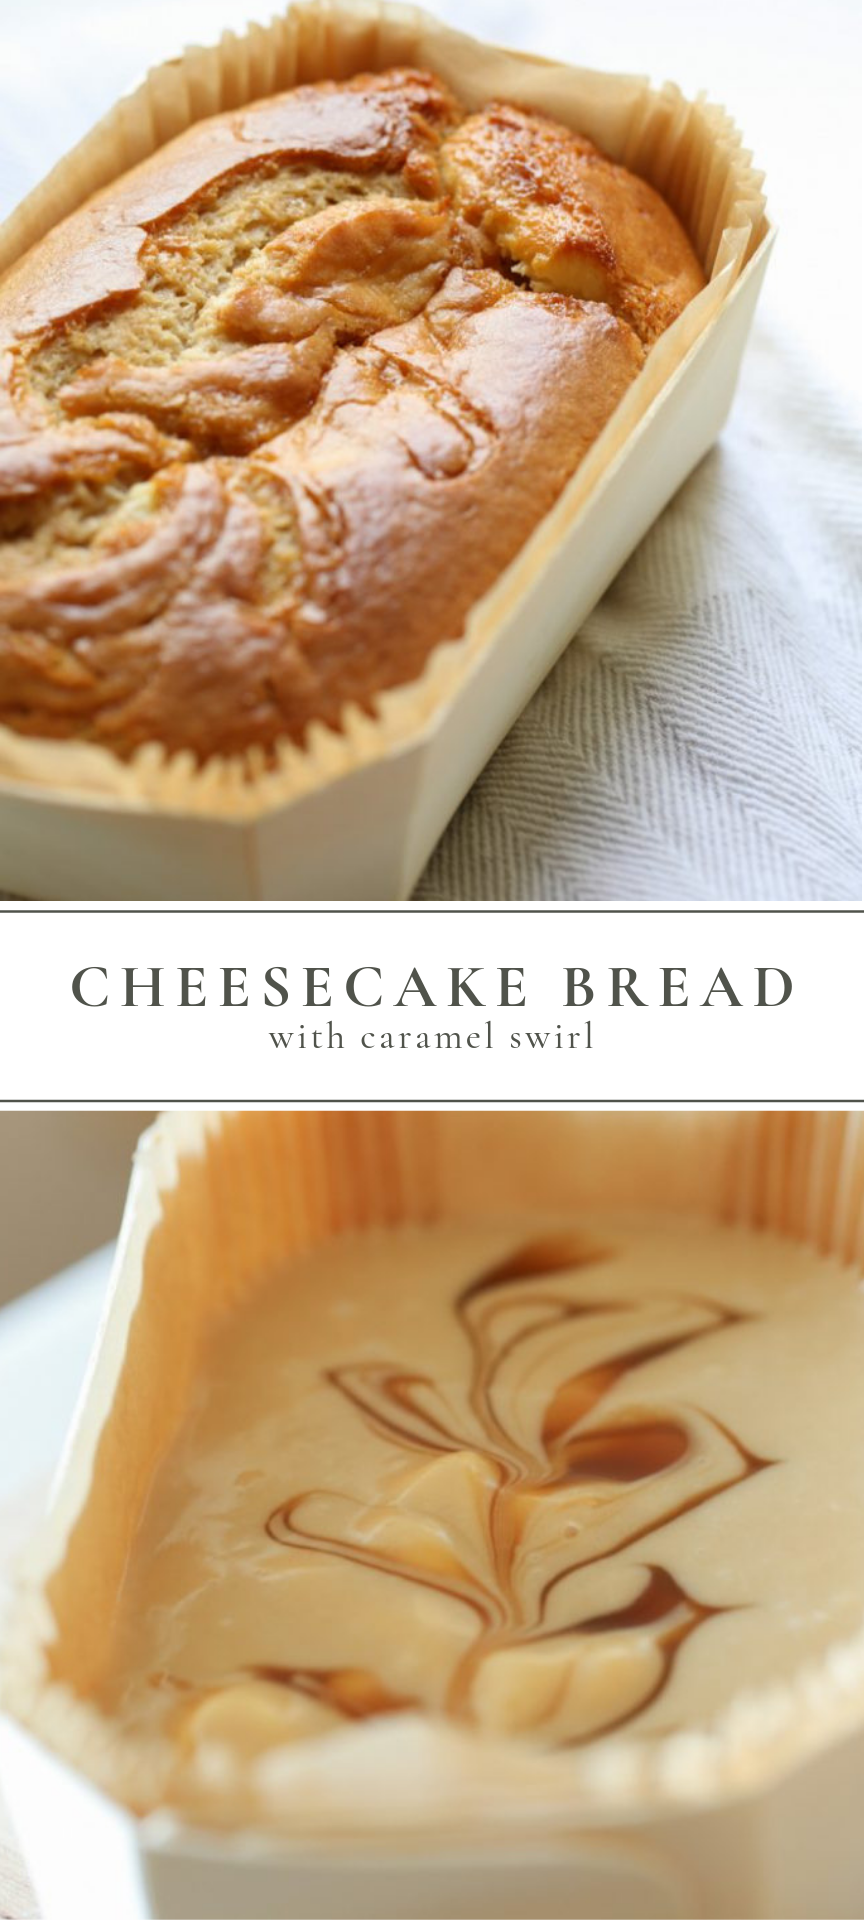 17 desserts Caramel cream cheeses ideas